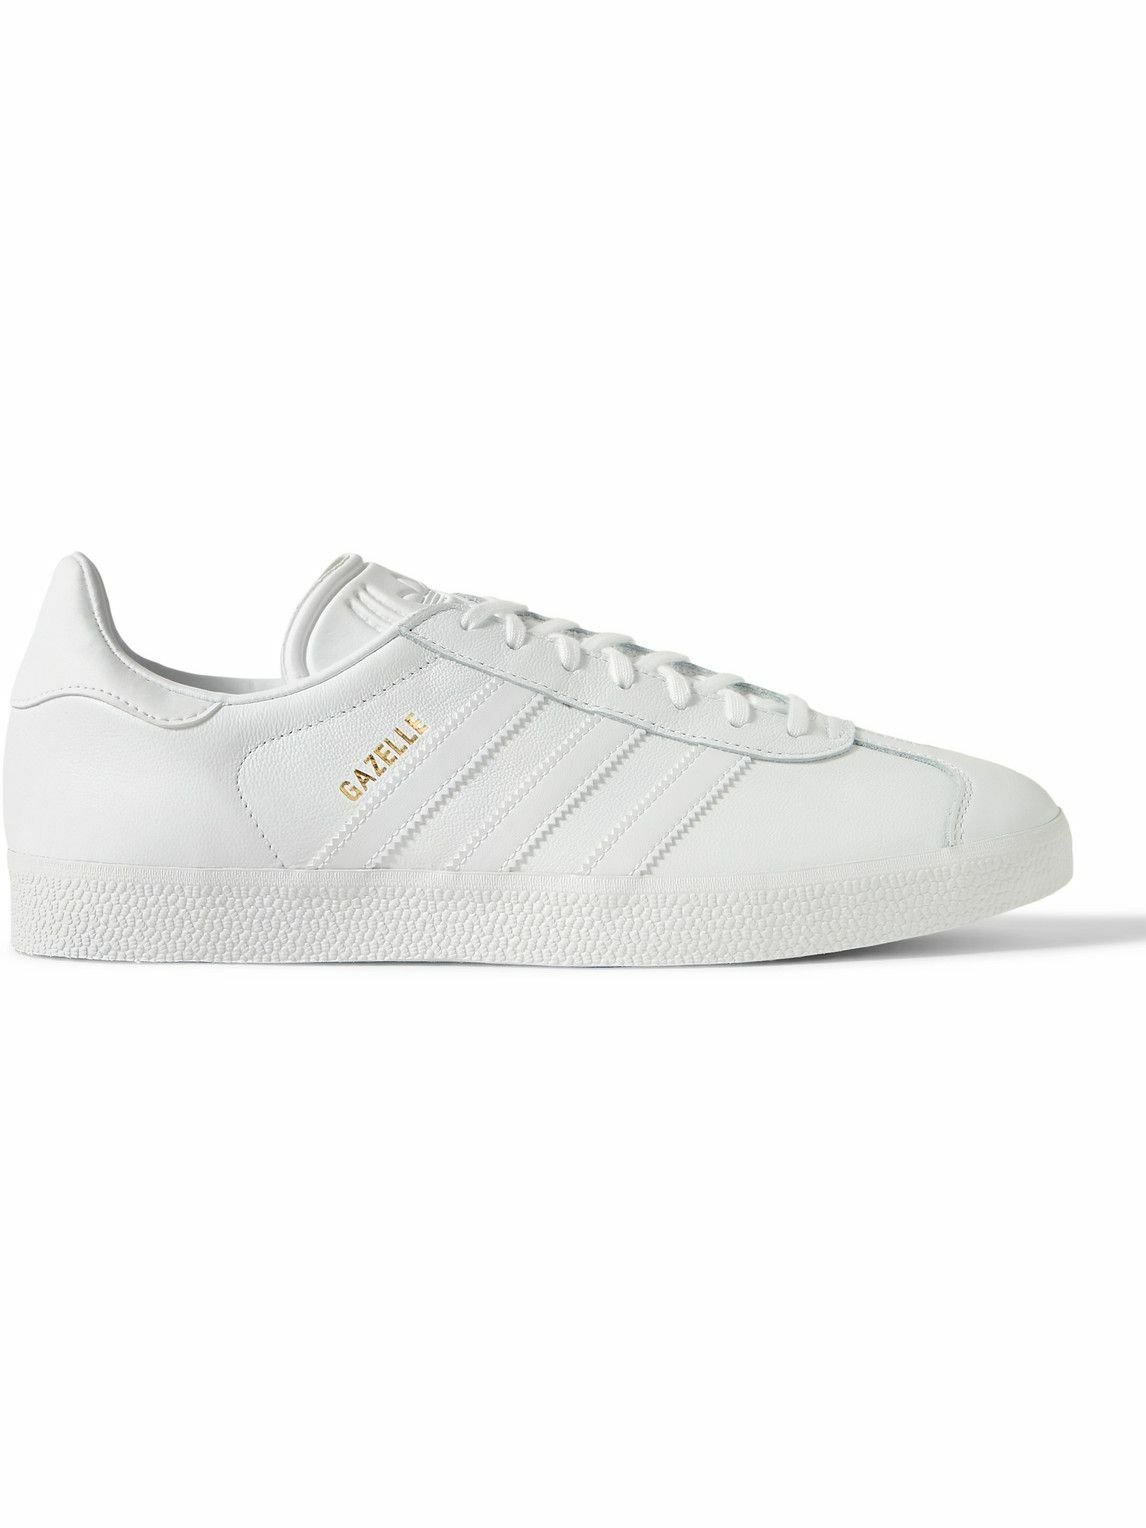 adidas Originals - Gazelle Leather Sneakers - White adidas Originals